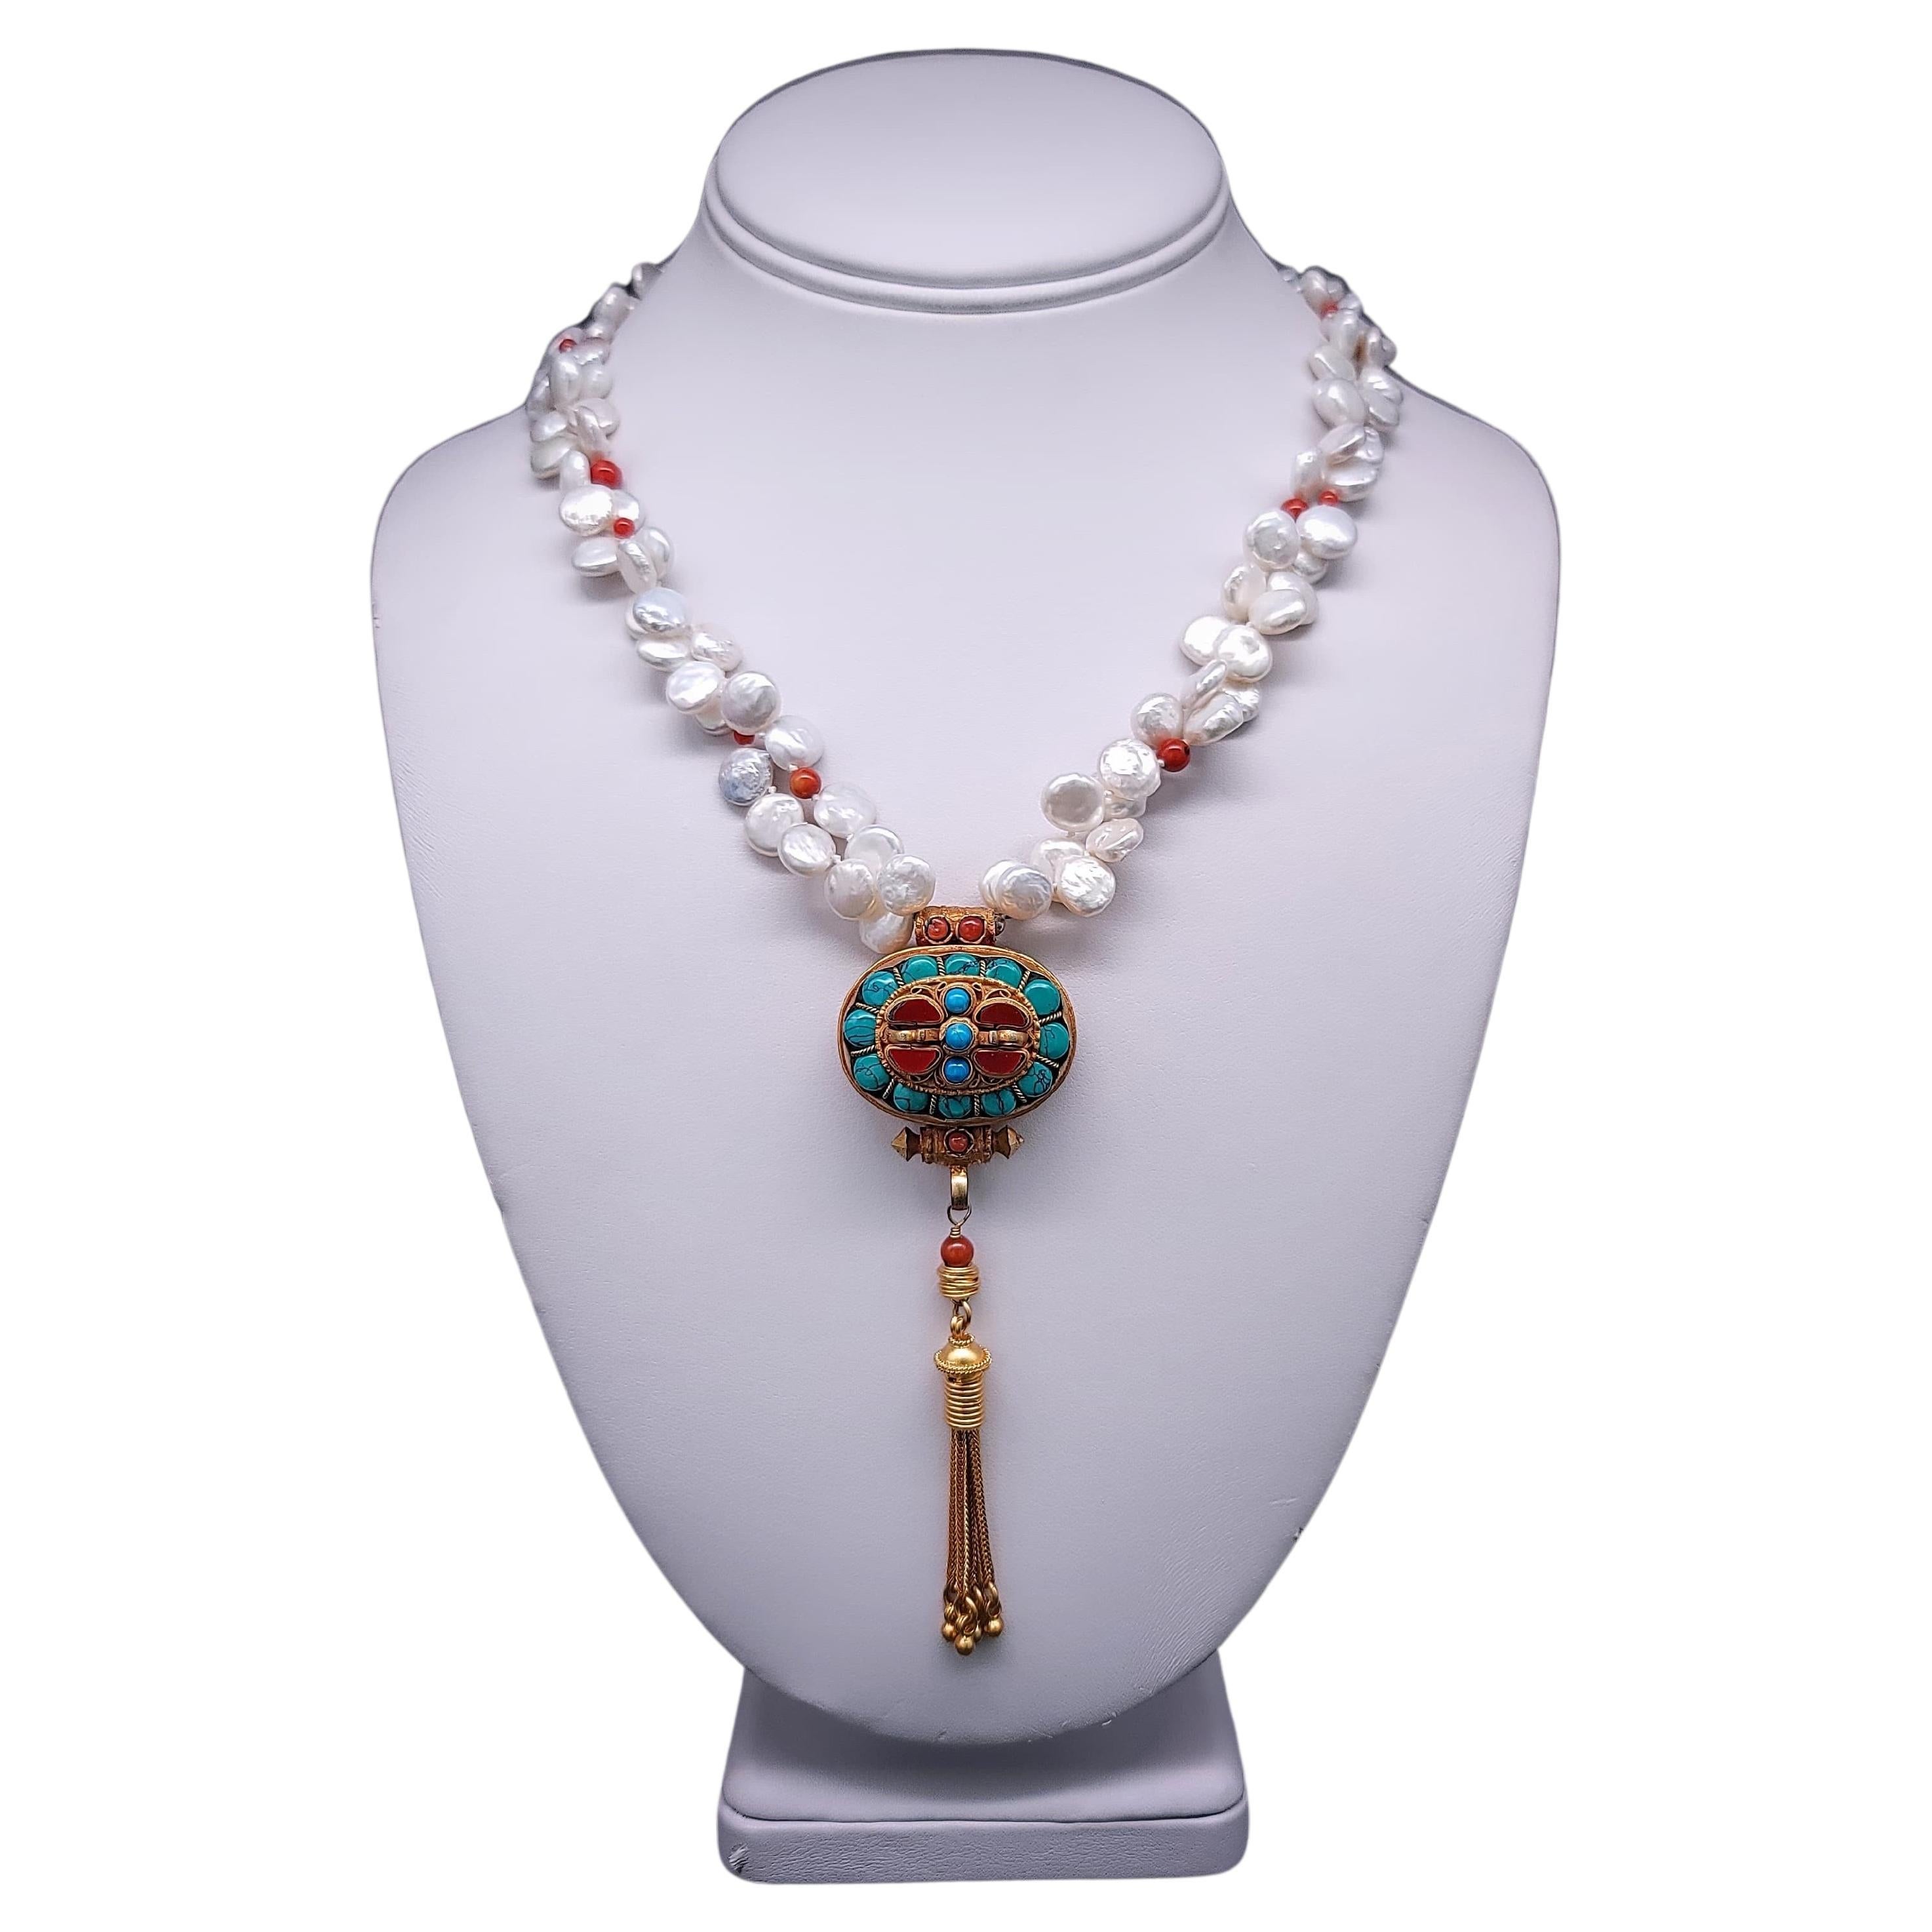 A.Jeschel  Pearl necklace with Ghau Box pendant.